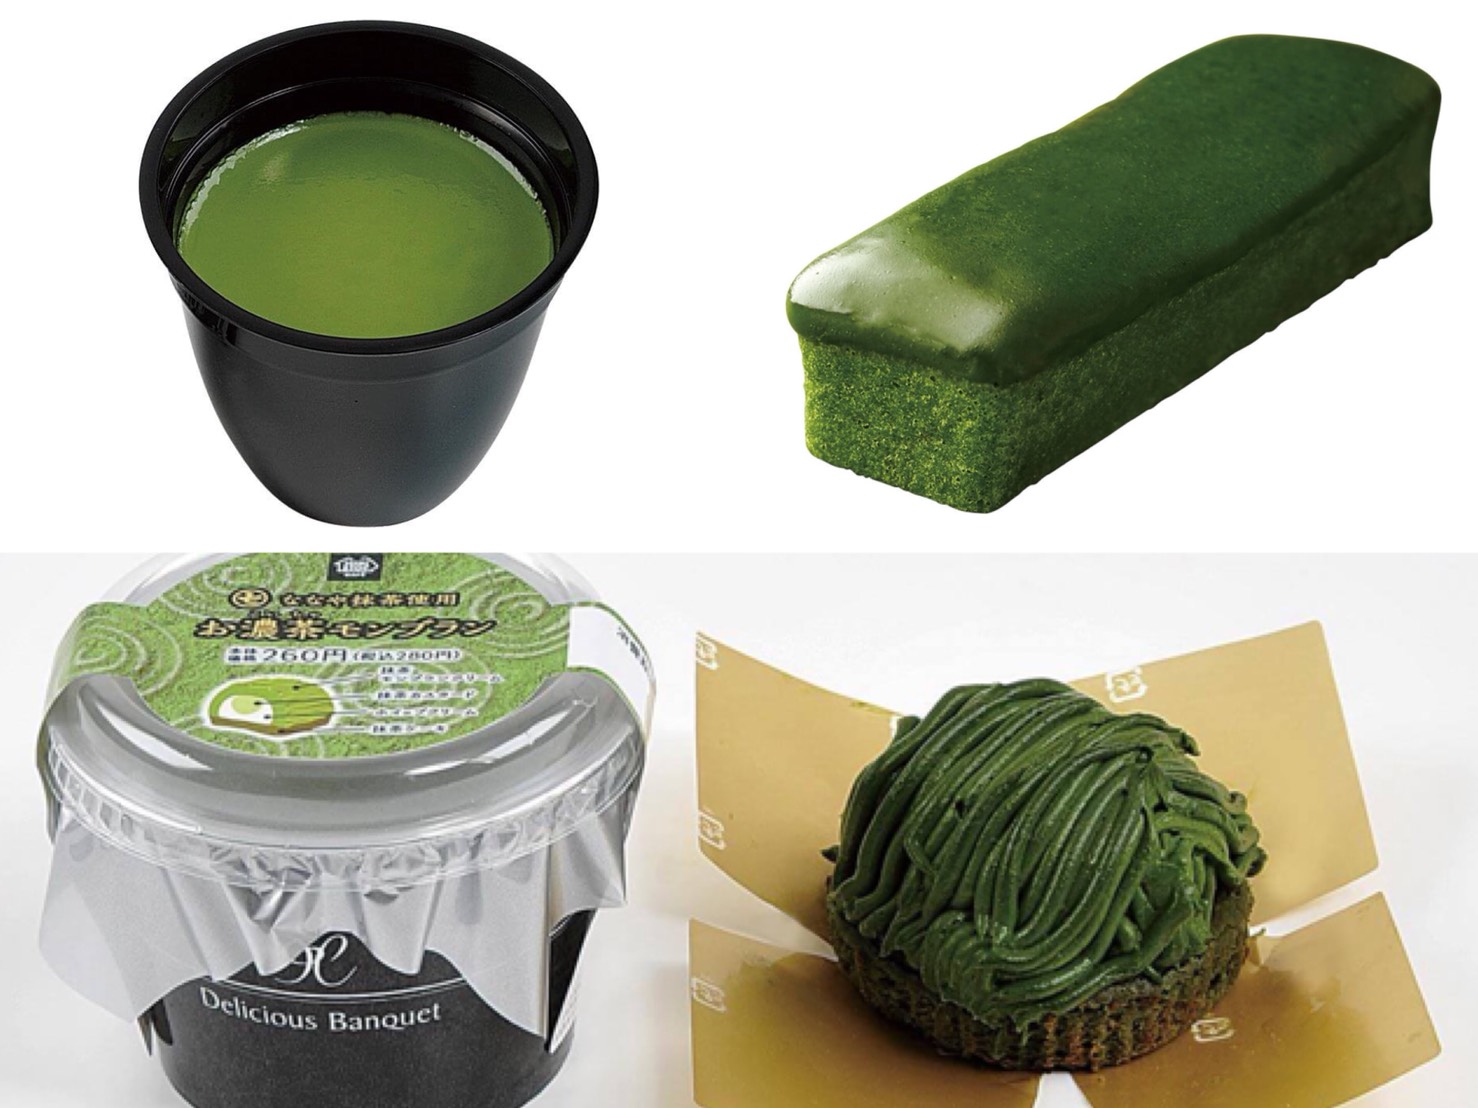 Ministop matcha dessert using “Nanaya” green tea